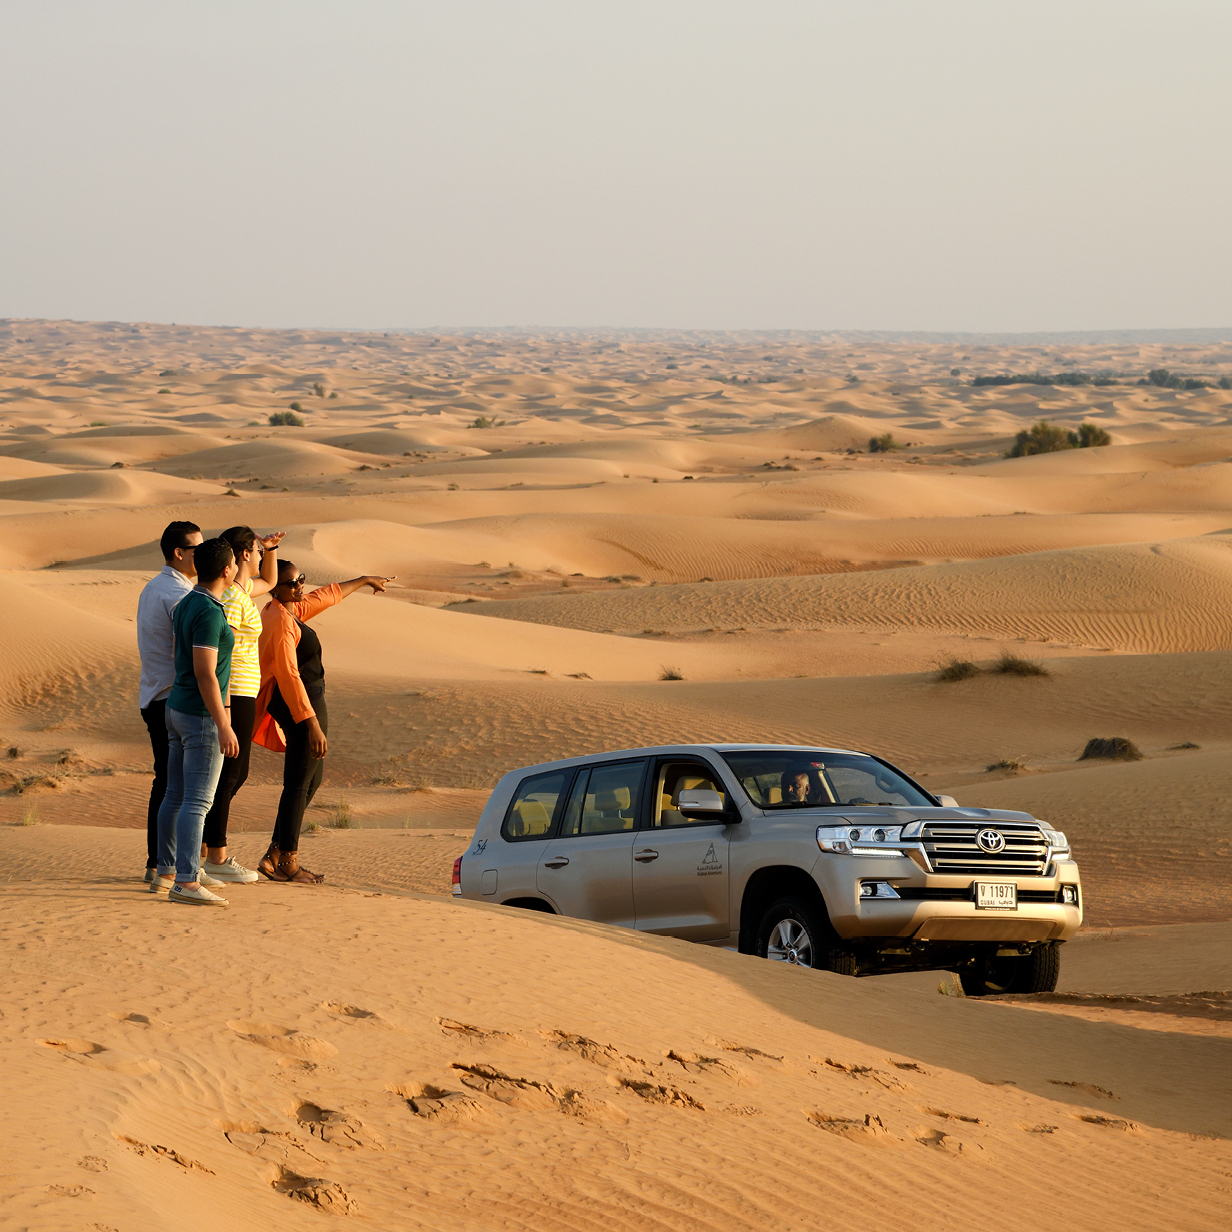 VIP Desert Safari in Dubai - Private Vehicle, , large